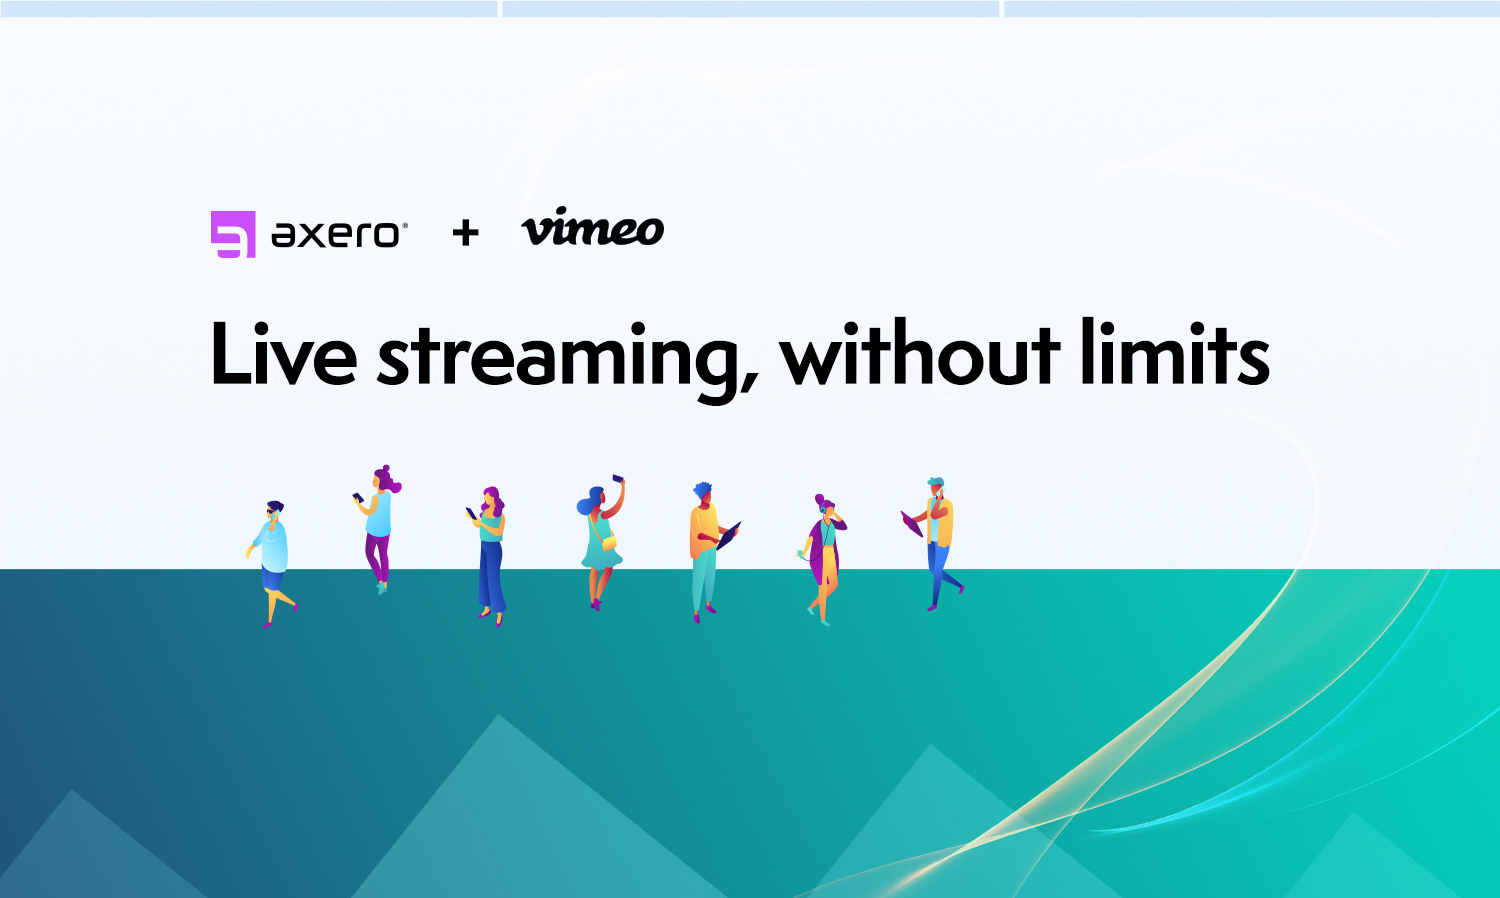 Axero Vimeo partnership